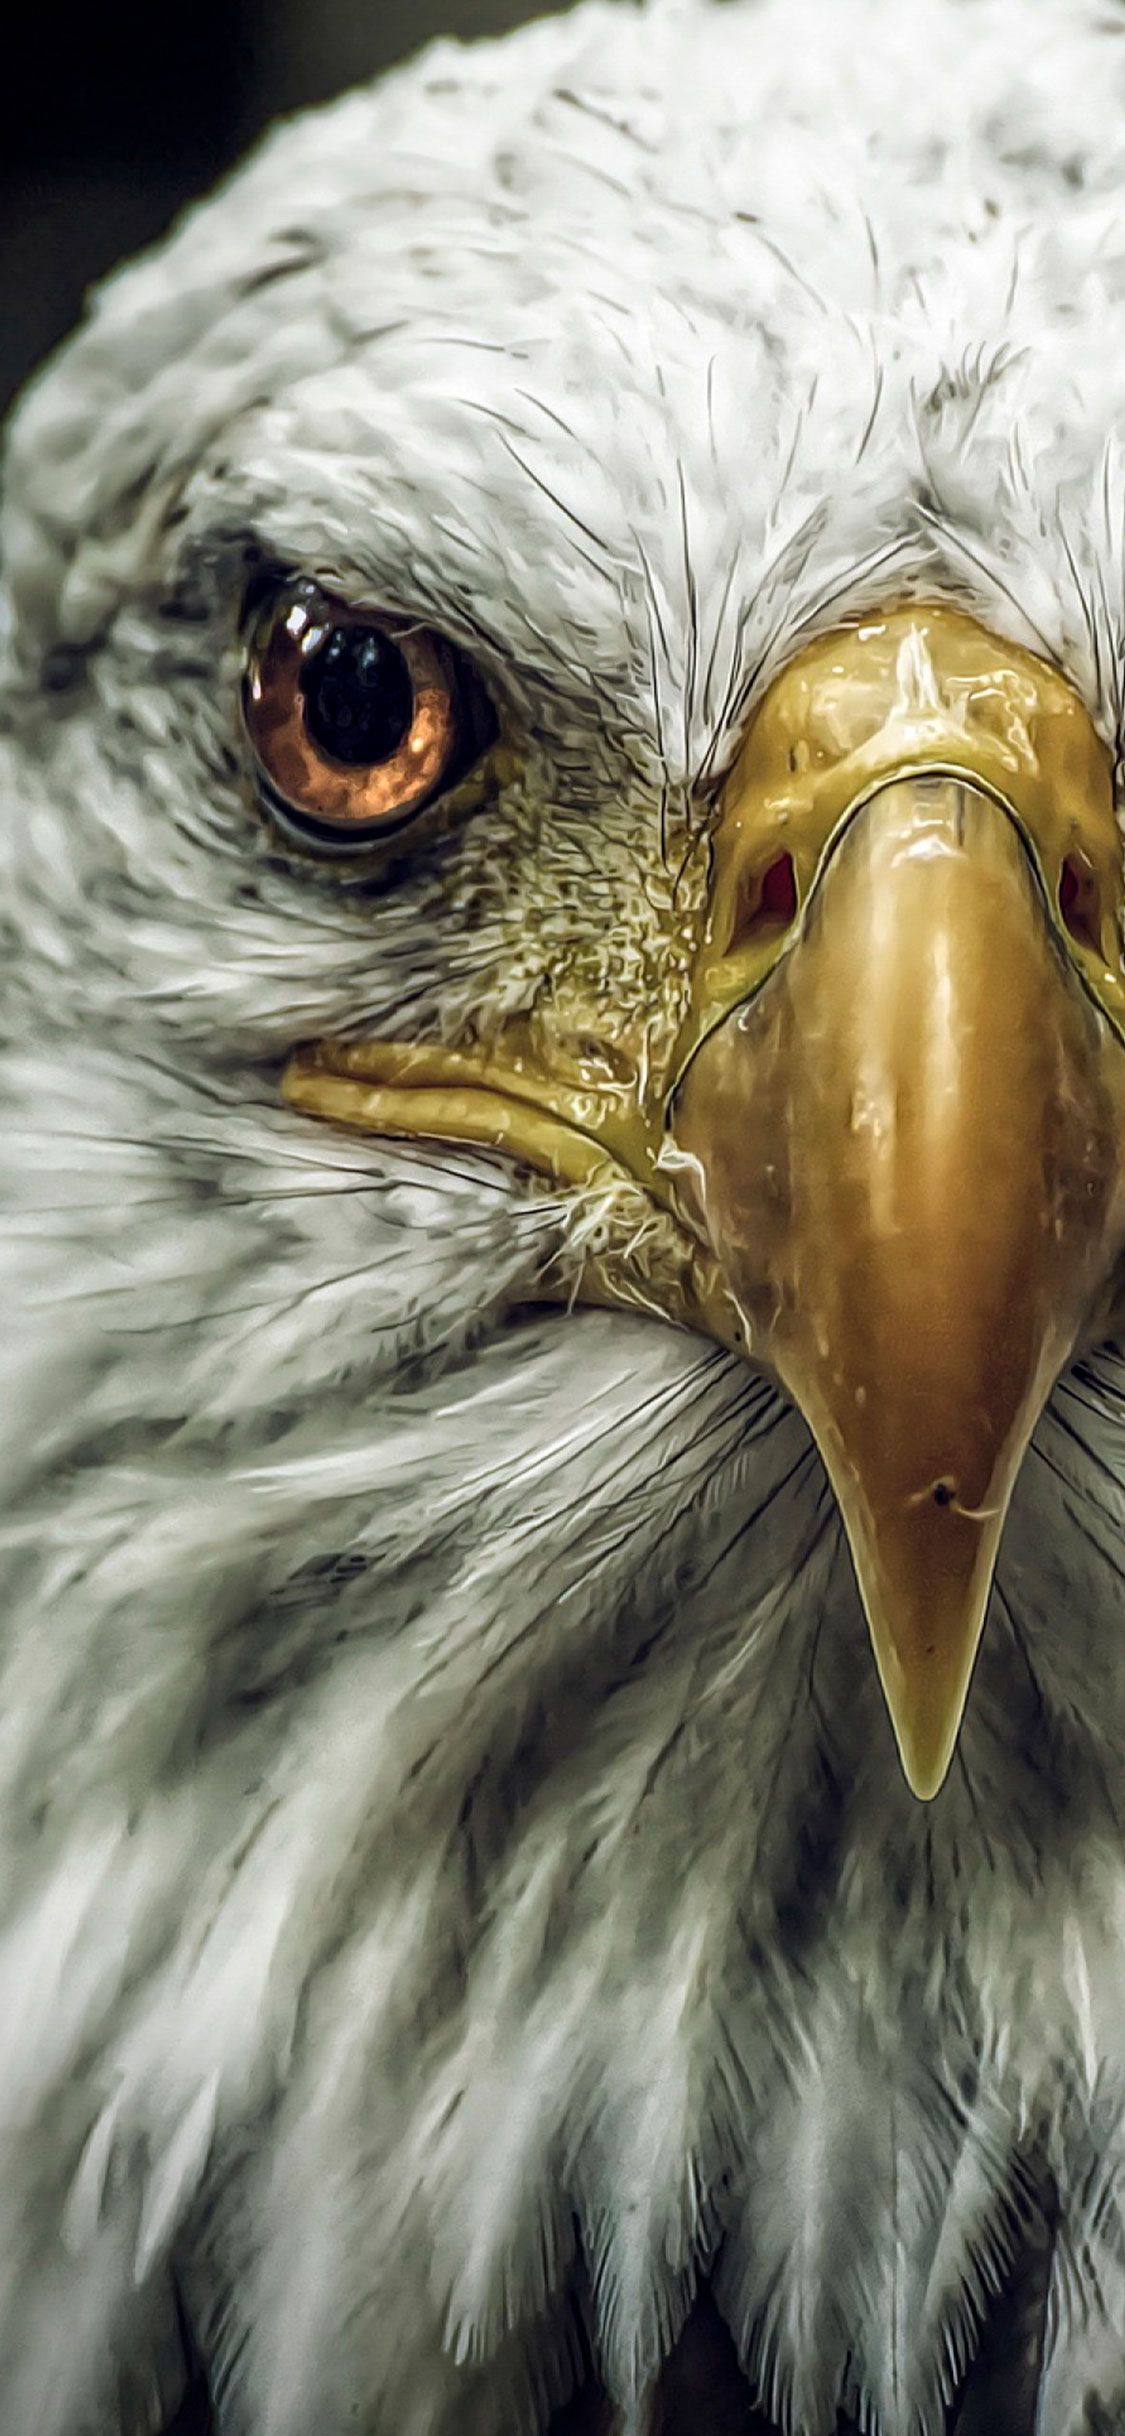 eagle wallpaper iphone